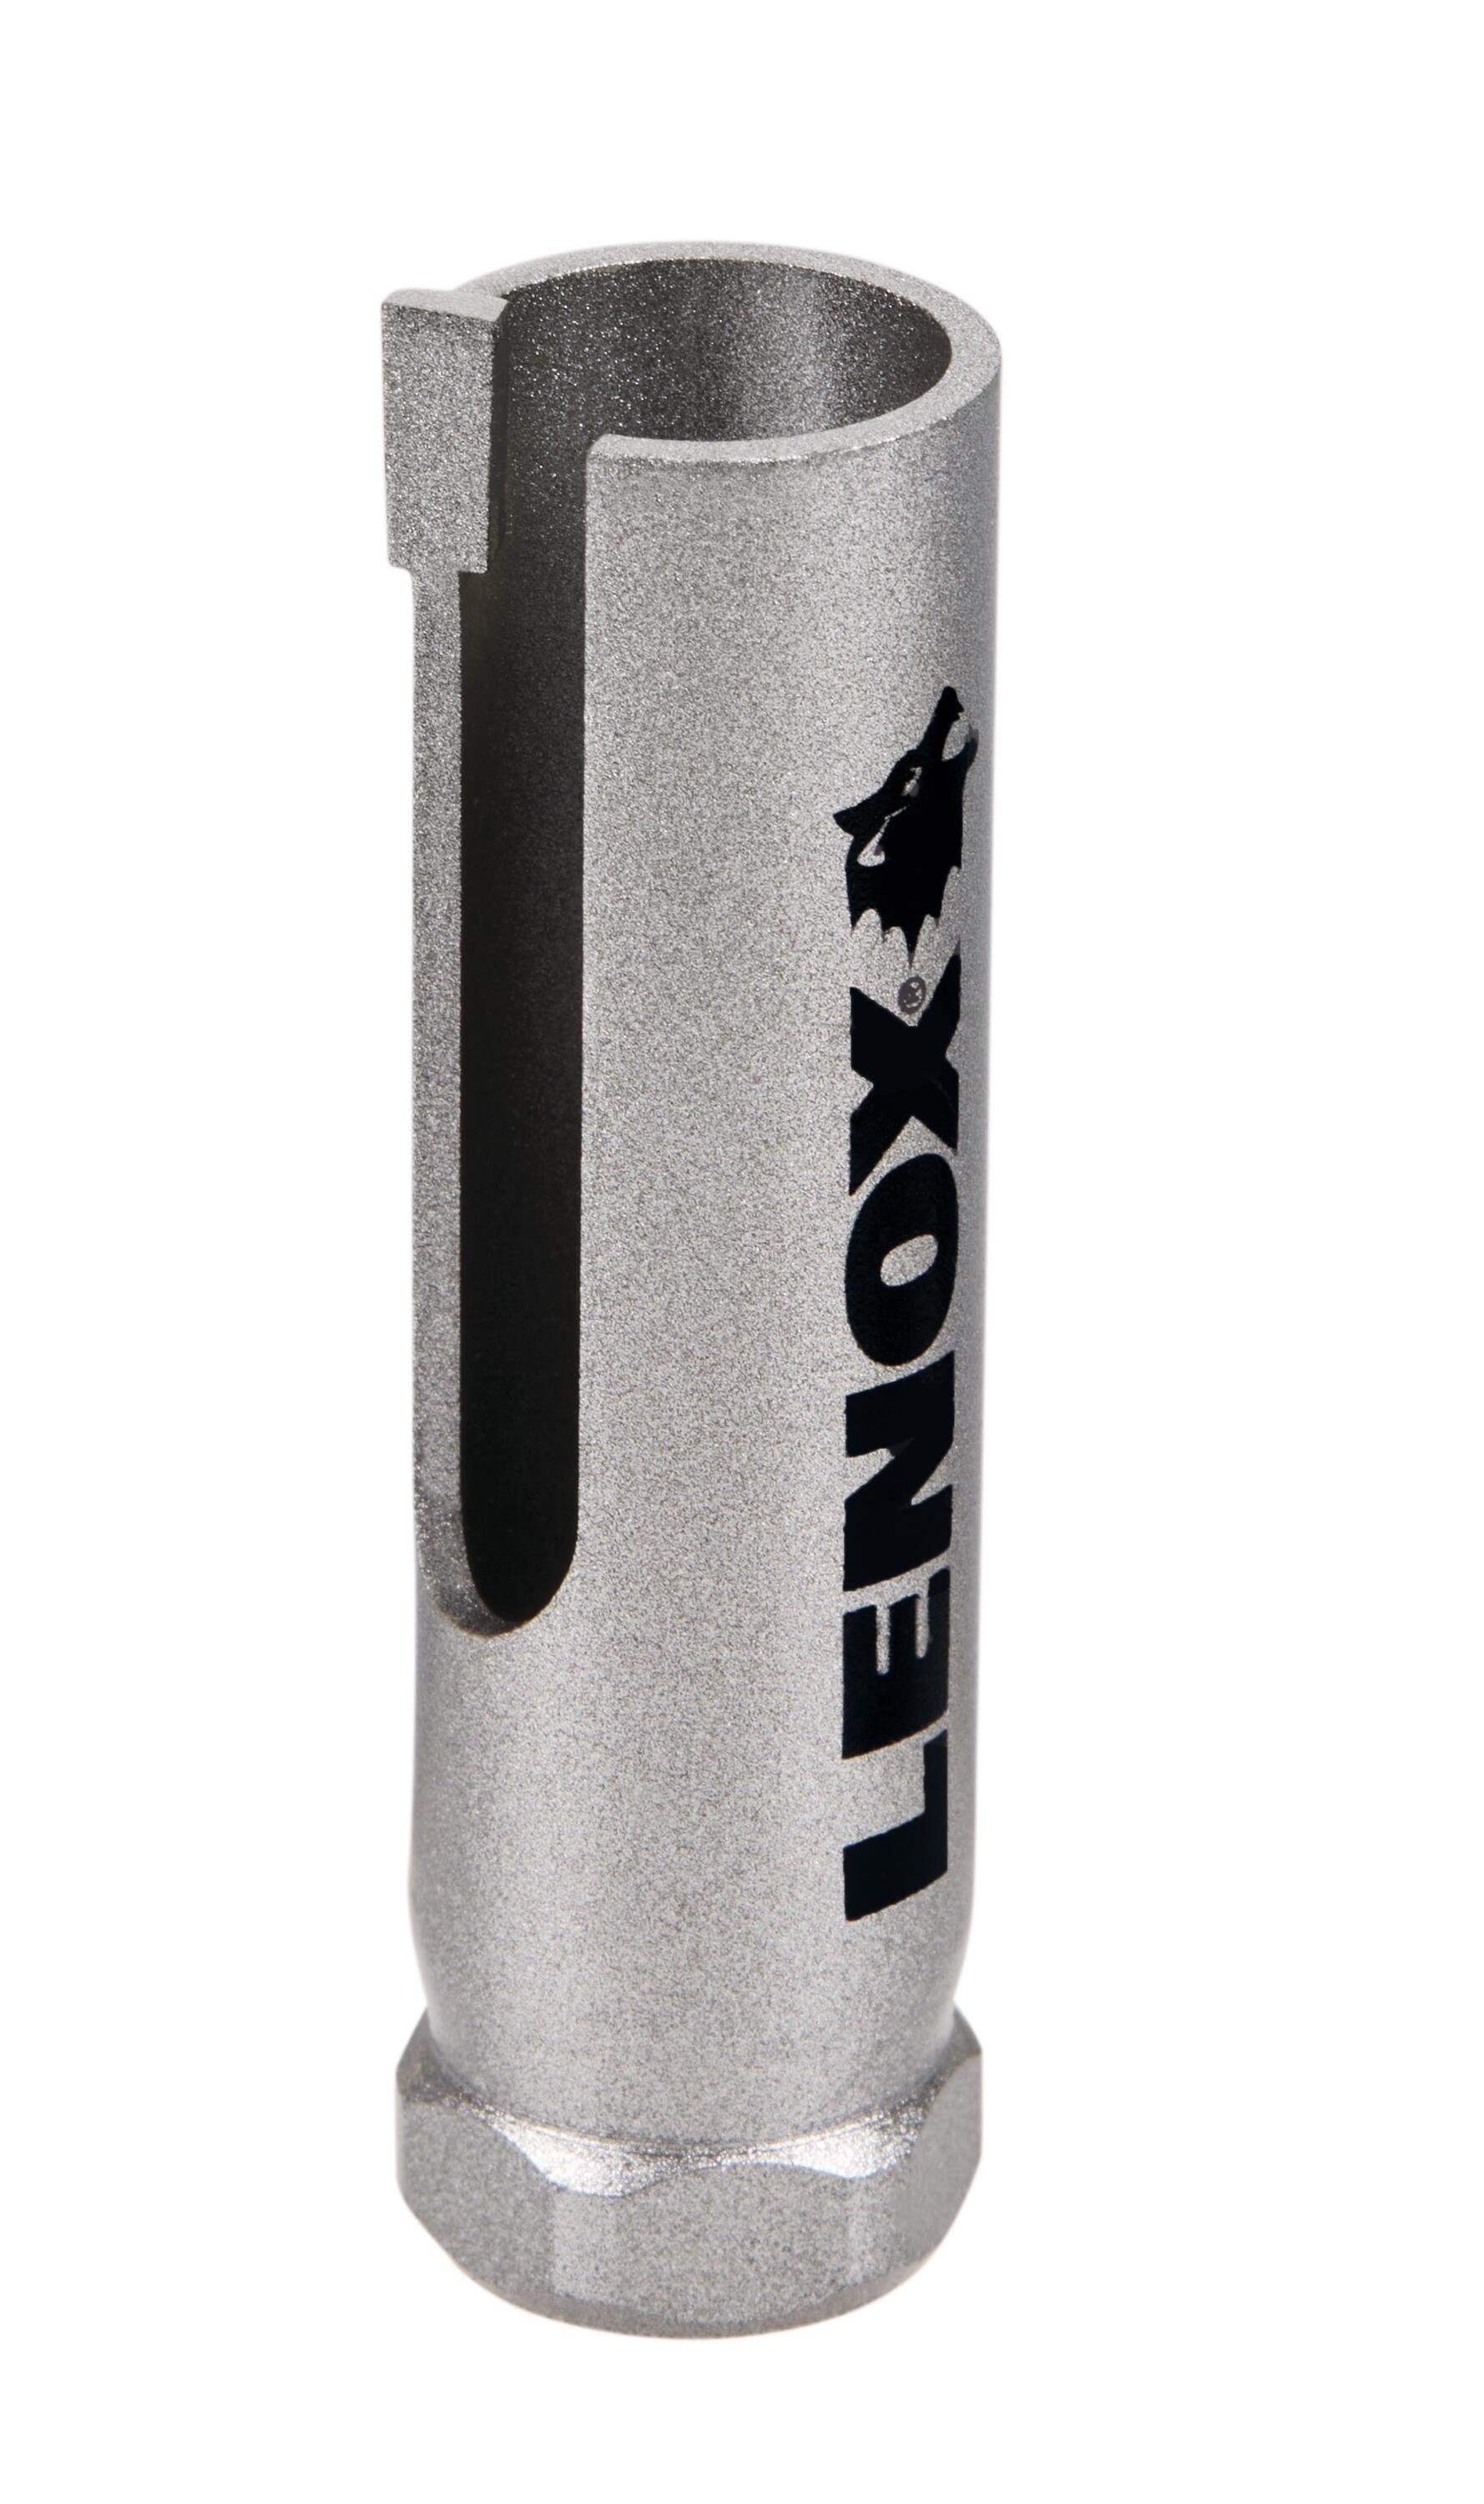 Lenox Lochsäge LXAH41 Carbide Multi-Material 25 mm, Ø 25 mm